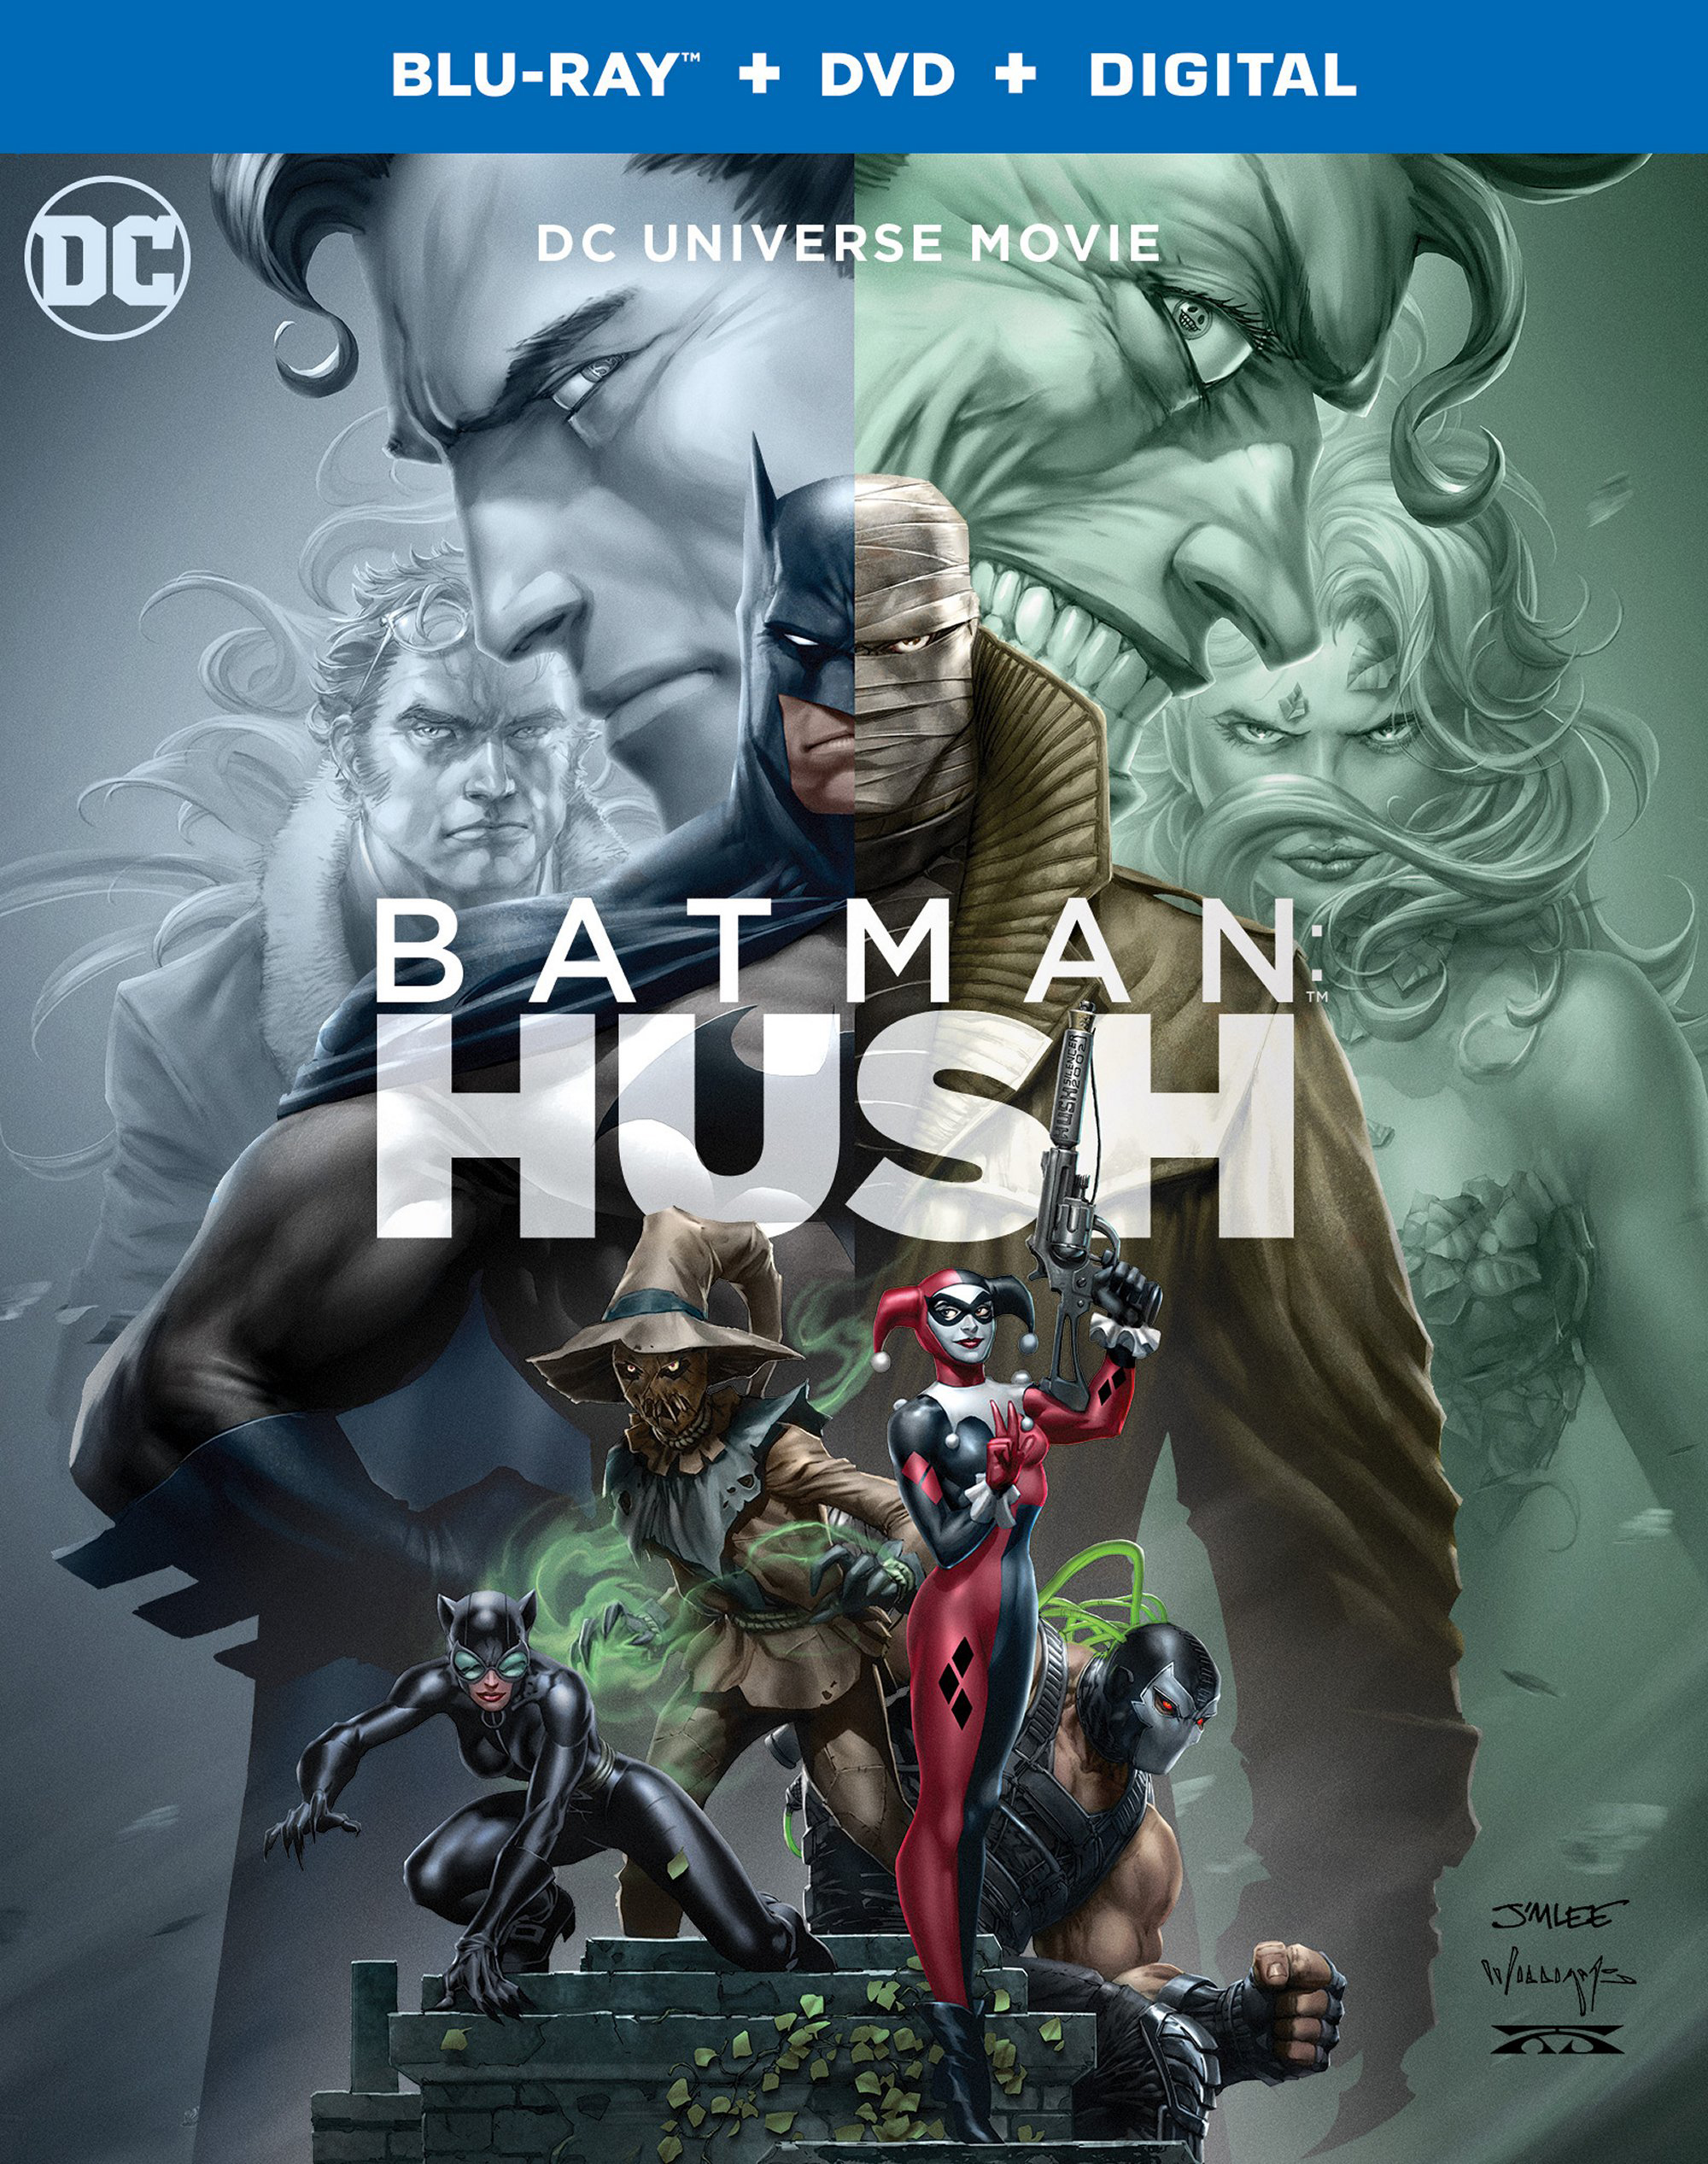 Batman-Hush-Blu-ray-Cover.jpg